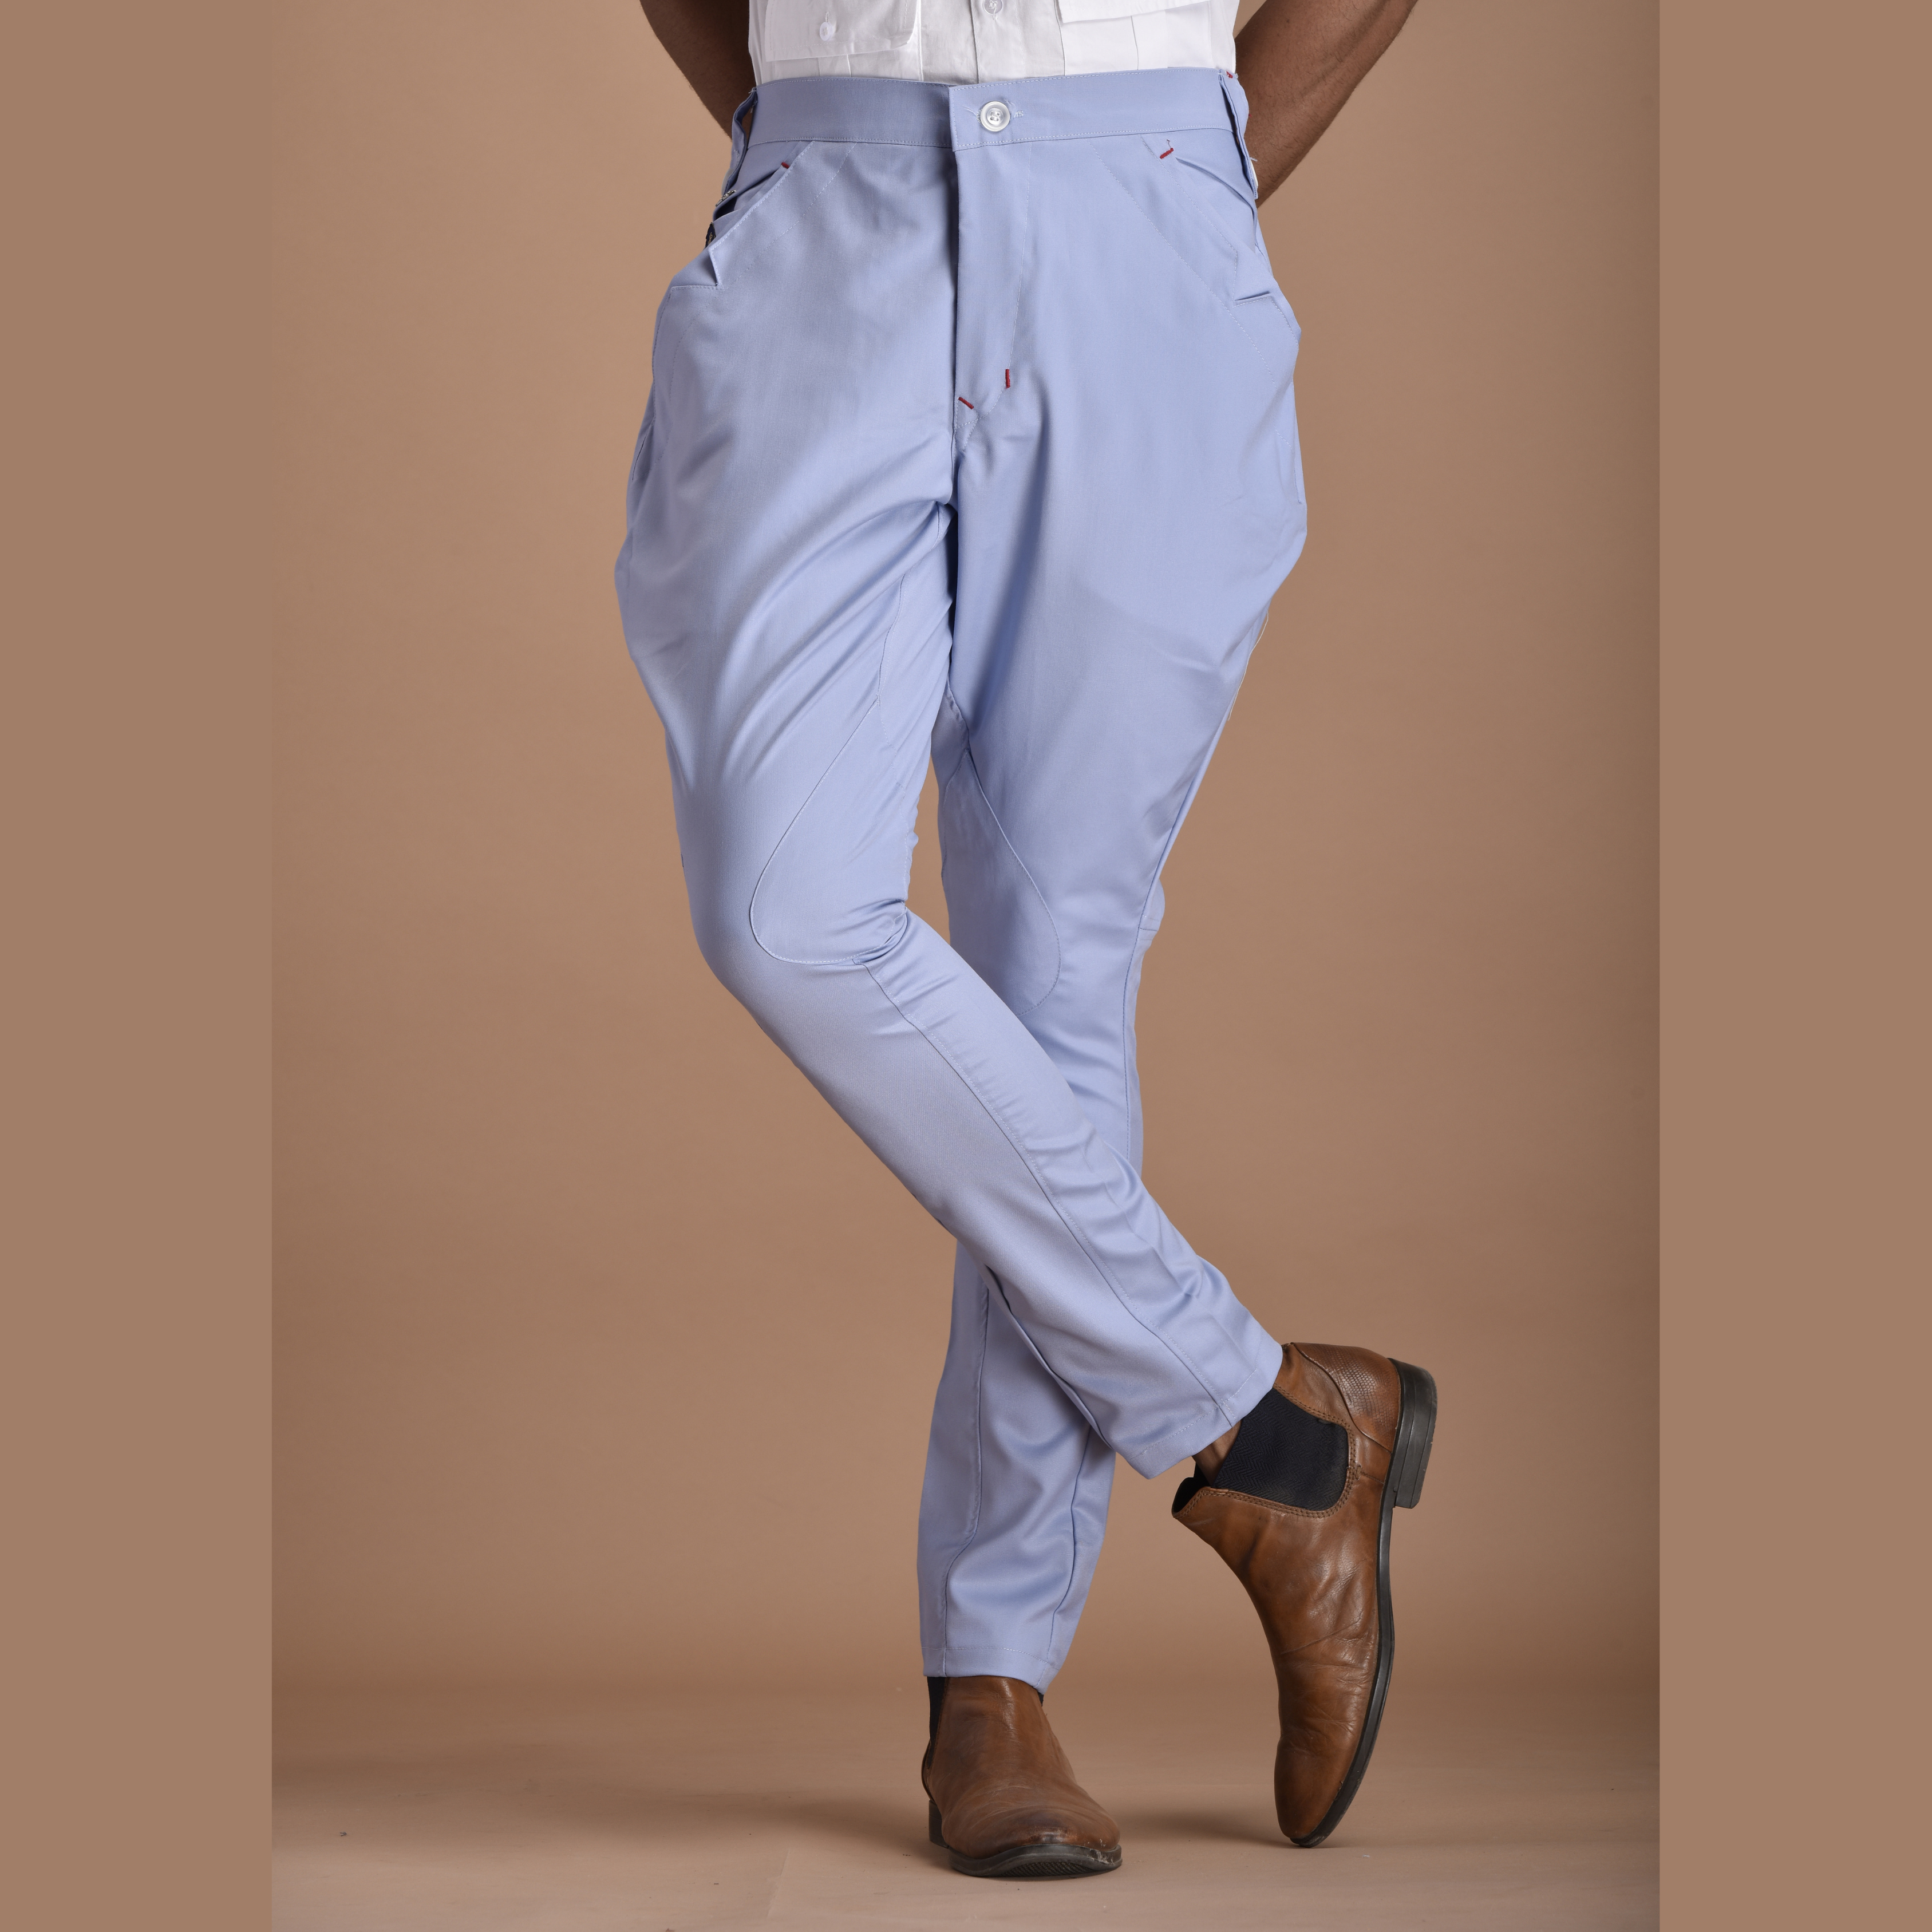 Buy Breakthrough Jodhpur Breeches with KNEEPATCH for Men | Jodhpur Pants |  Polo Pants | Fashion Wear Balloon Pants | Ethnic Trousers (Light Khaki  Breeches with Light Khaki Knee Patch-30) at Amazon.in